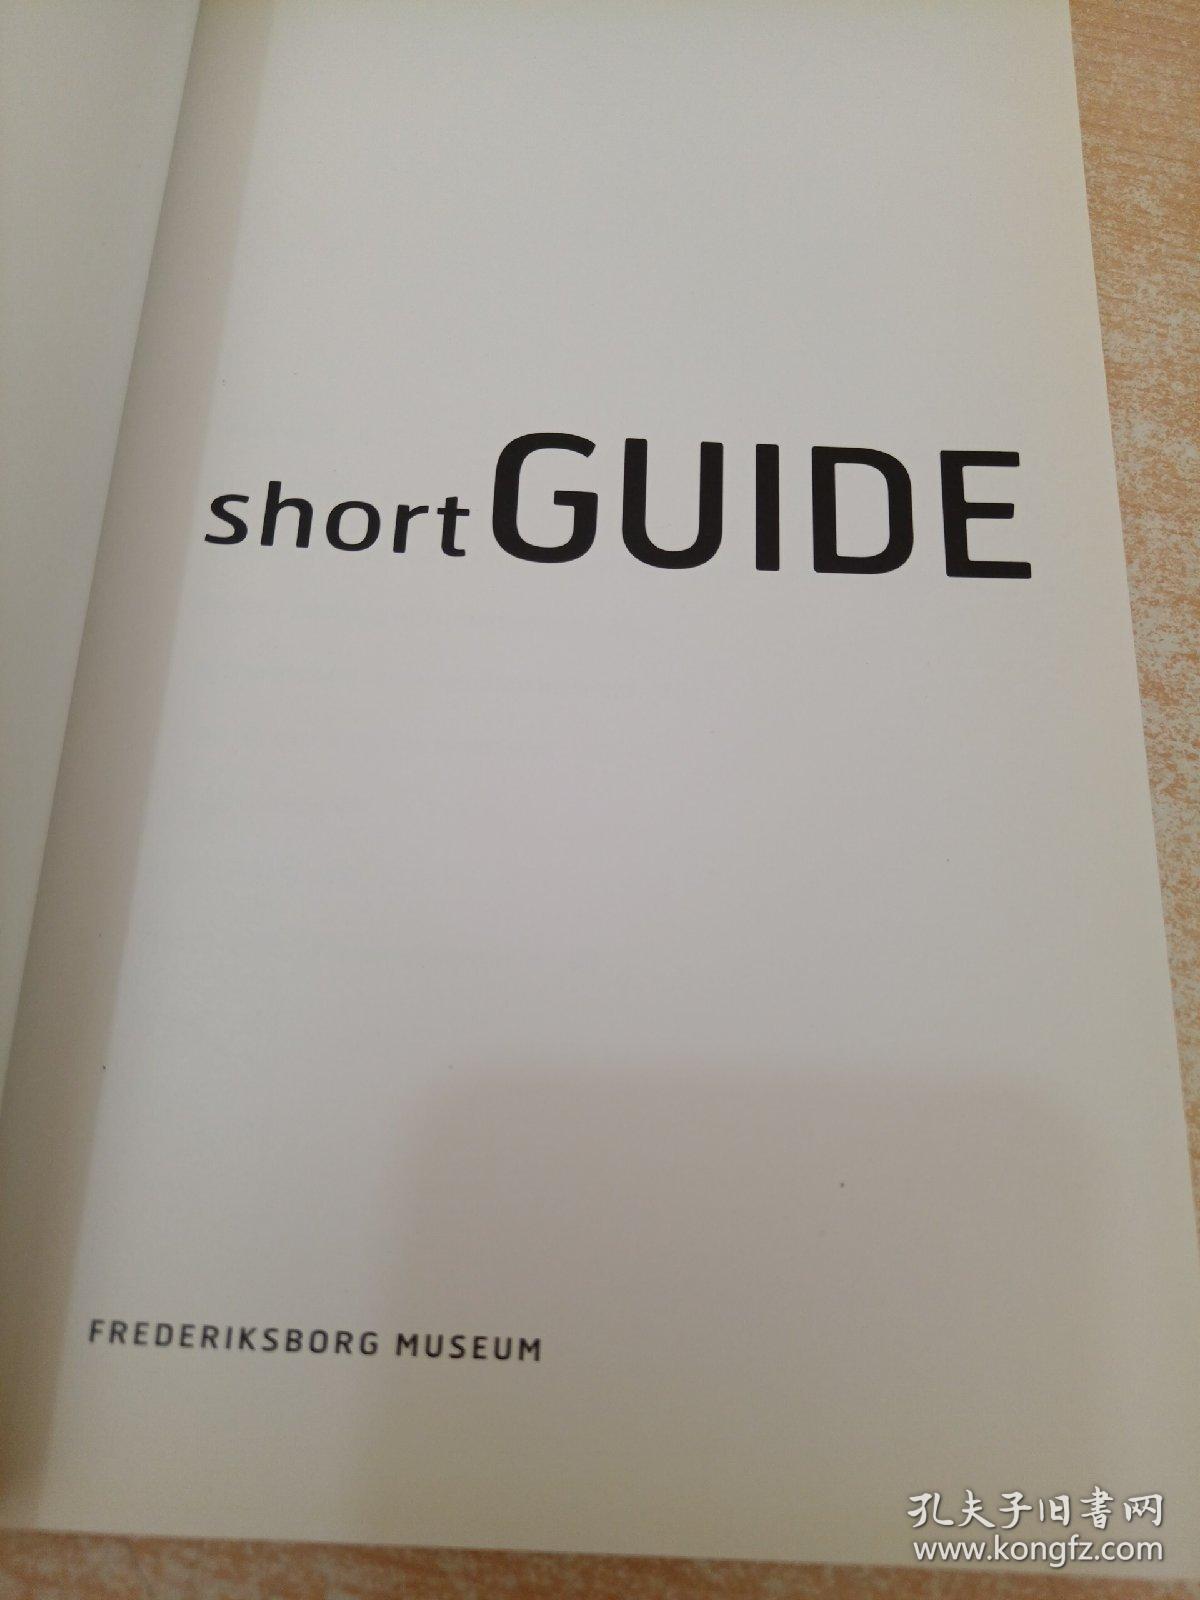 Short Guide: Frederiksborg Museum